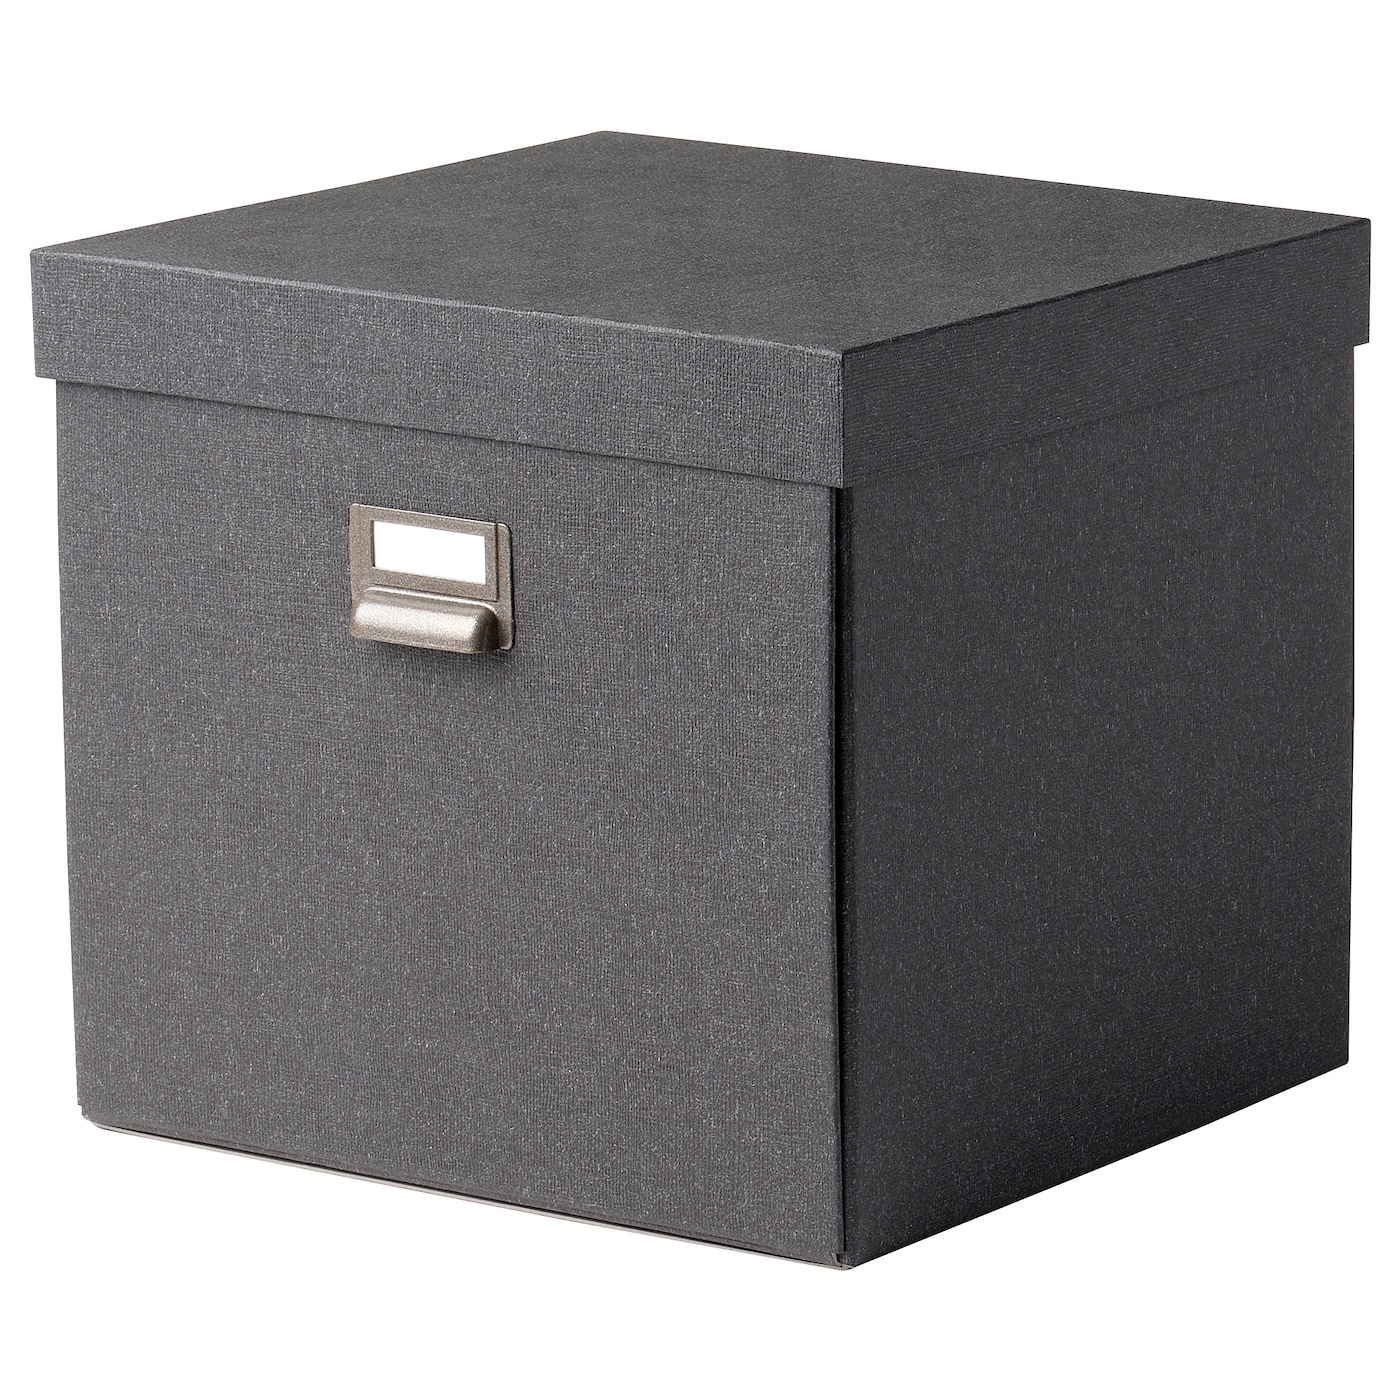 TJOG ЧУГ Коробка с крышкой, темно-серый, 32x31x30 см IKEA